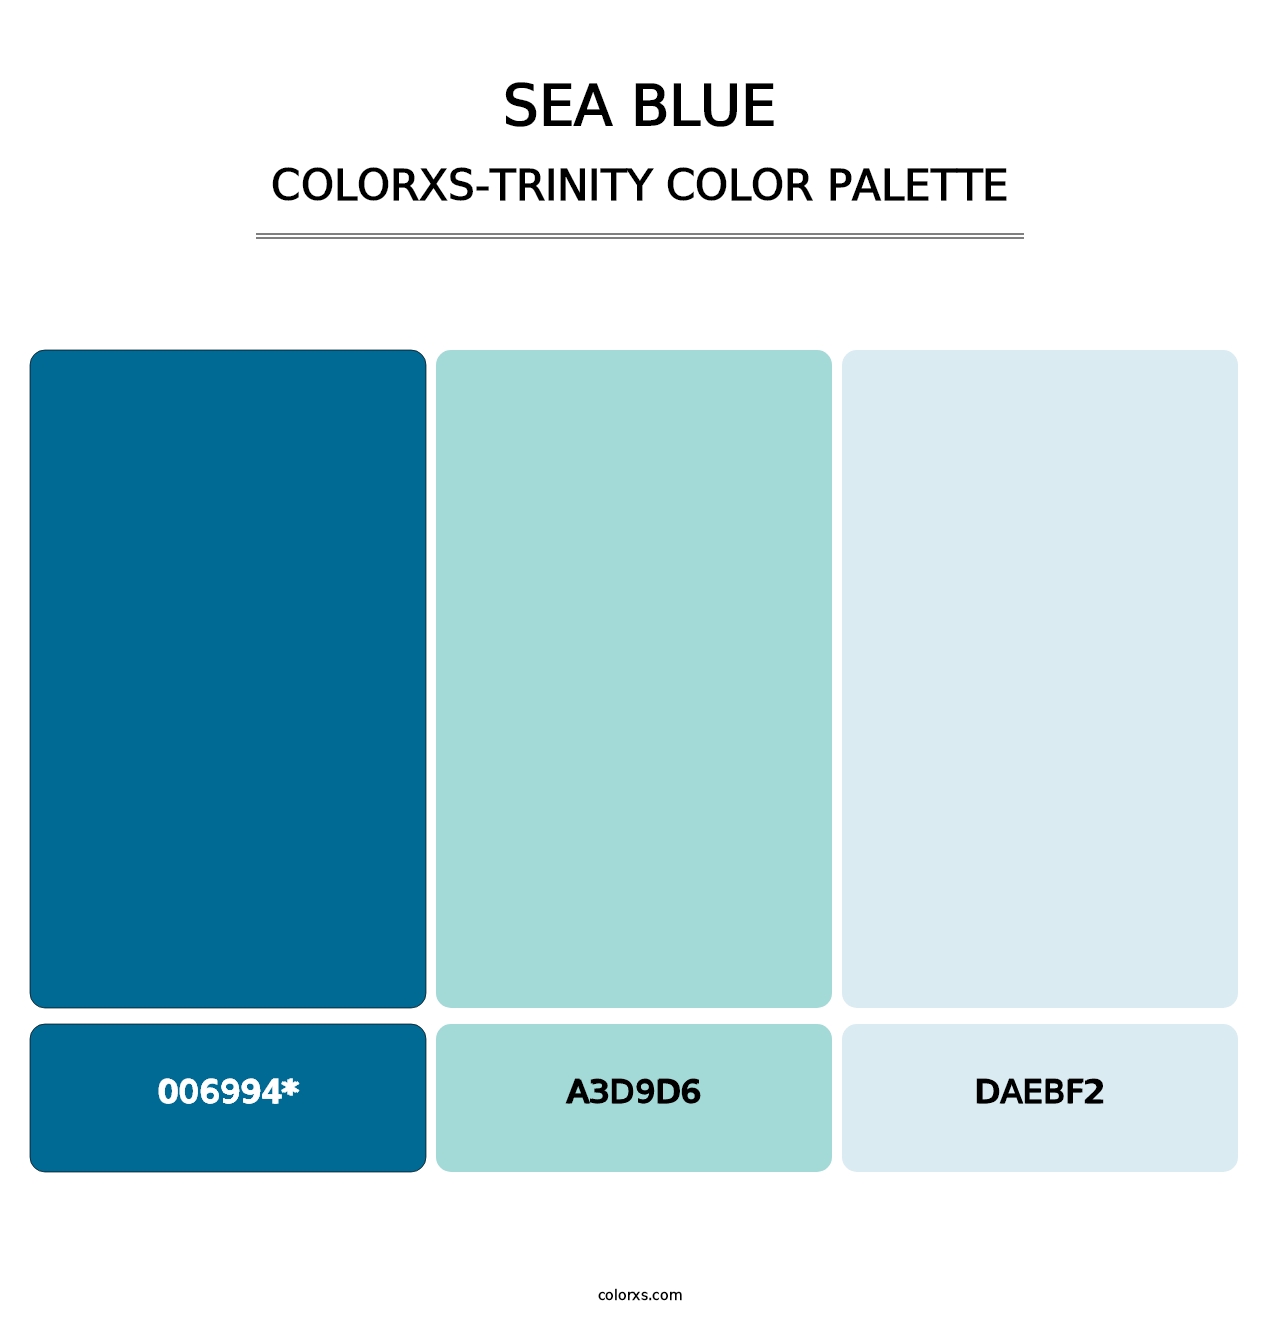 Sea Blue - Colorxs Trinity Palette